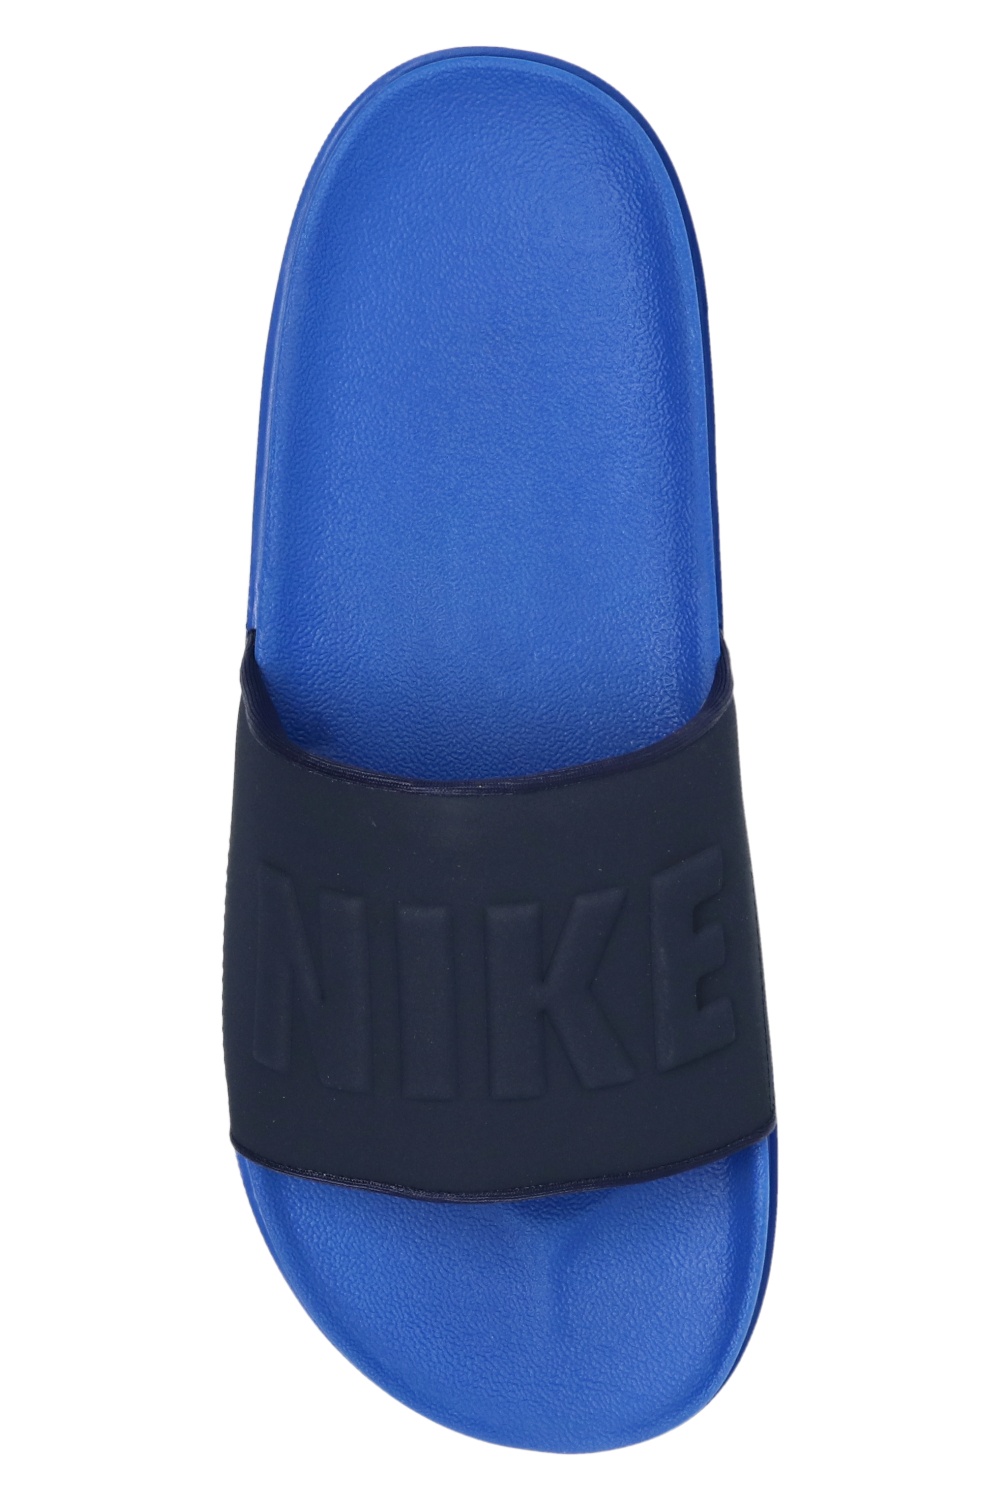 nike offcourt slide blue